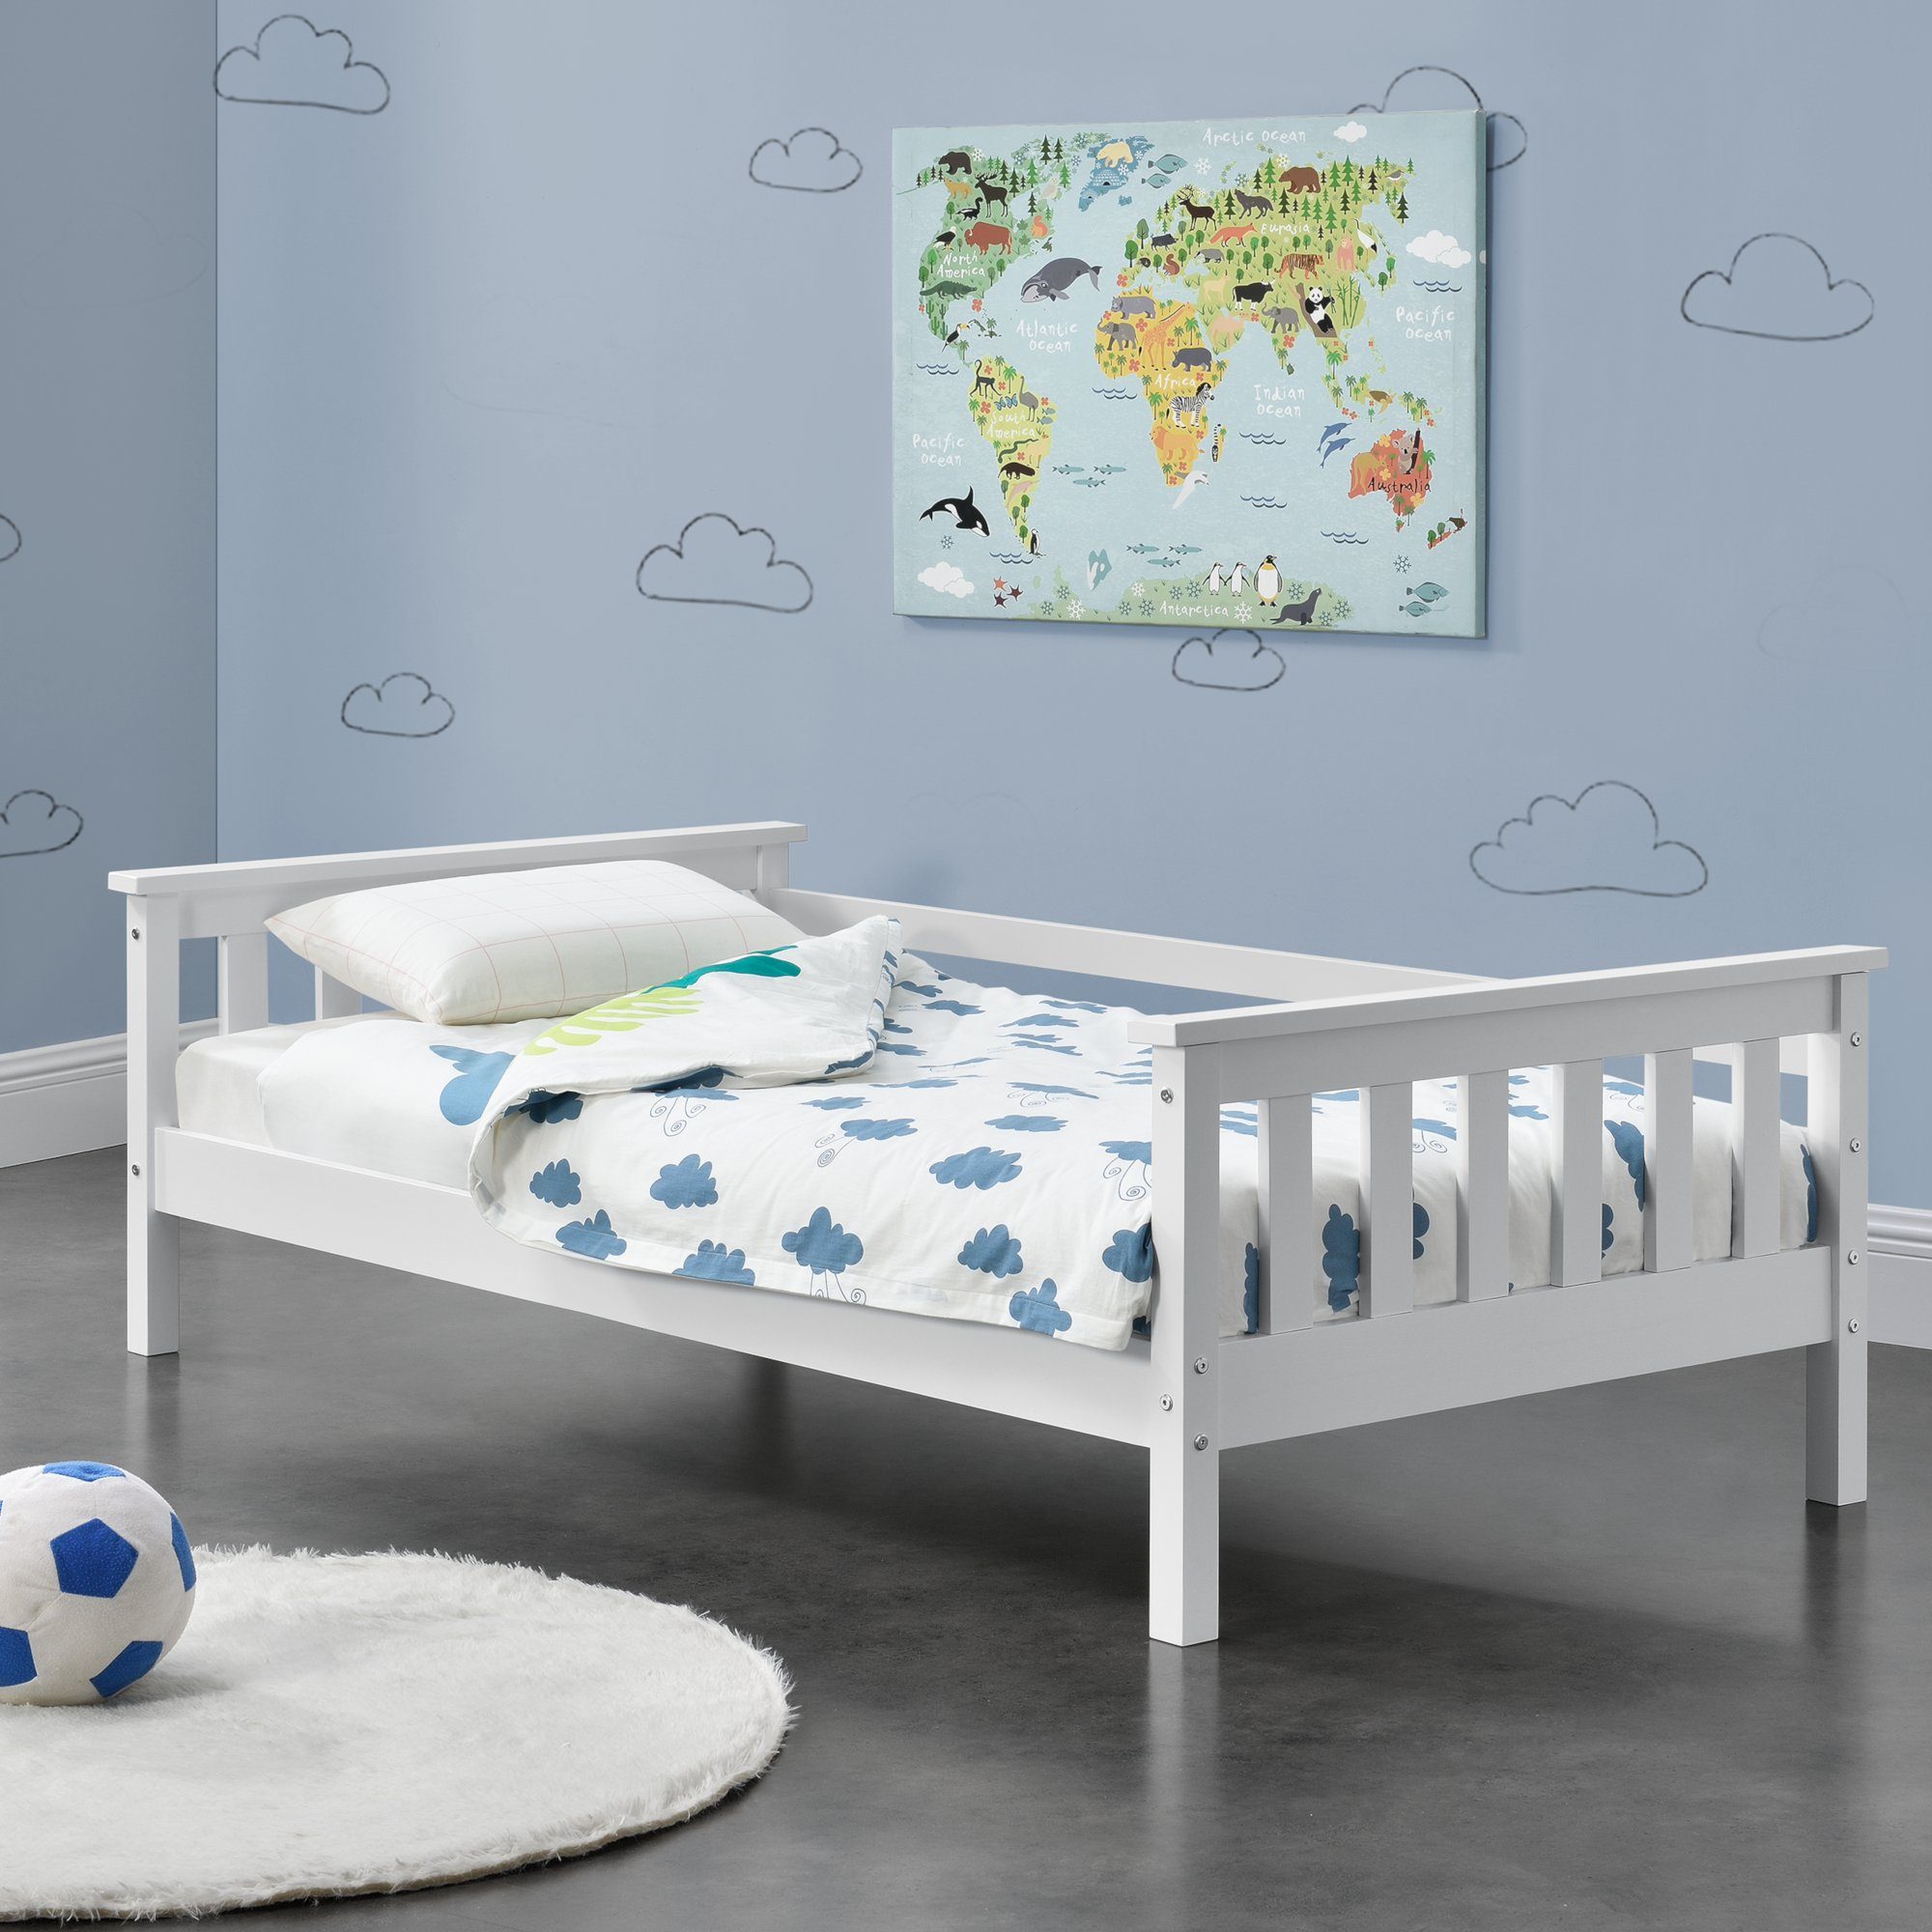 en.casa Kinderbett, »Nuuk« Bett mit Rausfallschutz weiß 80x160cm